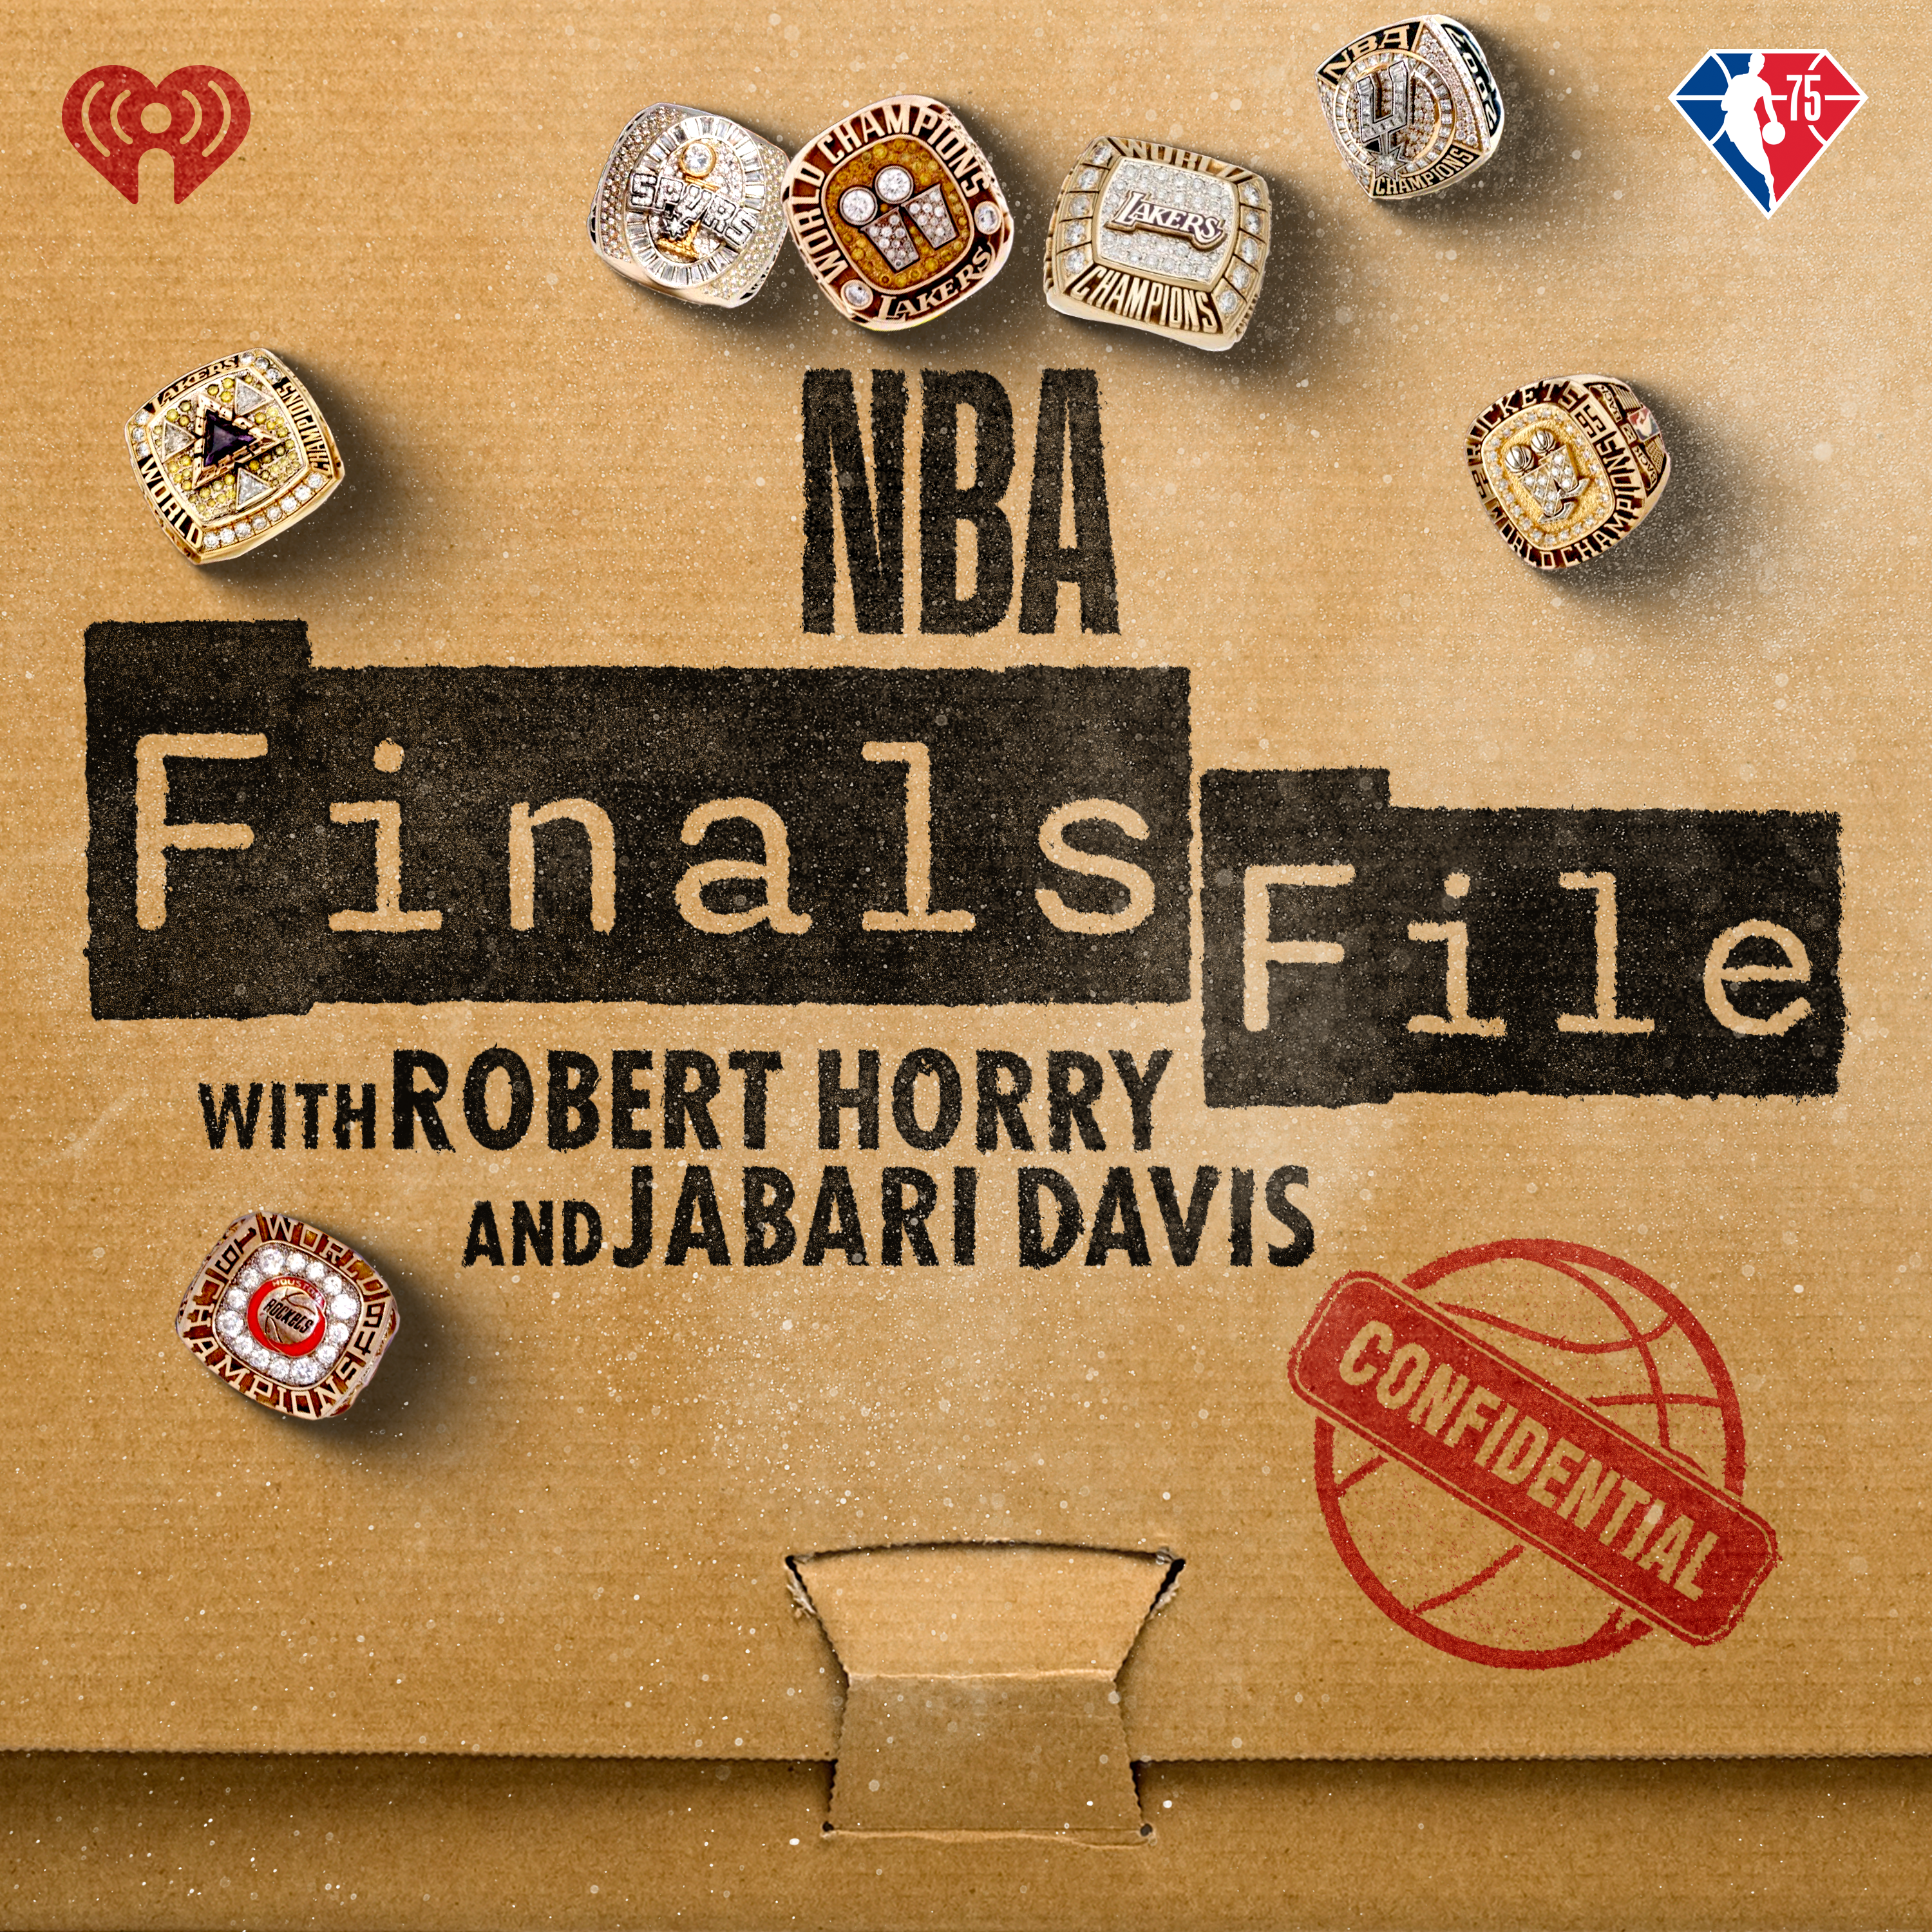 Introducing: NBA Finals File